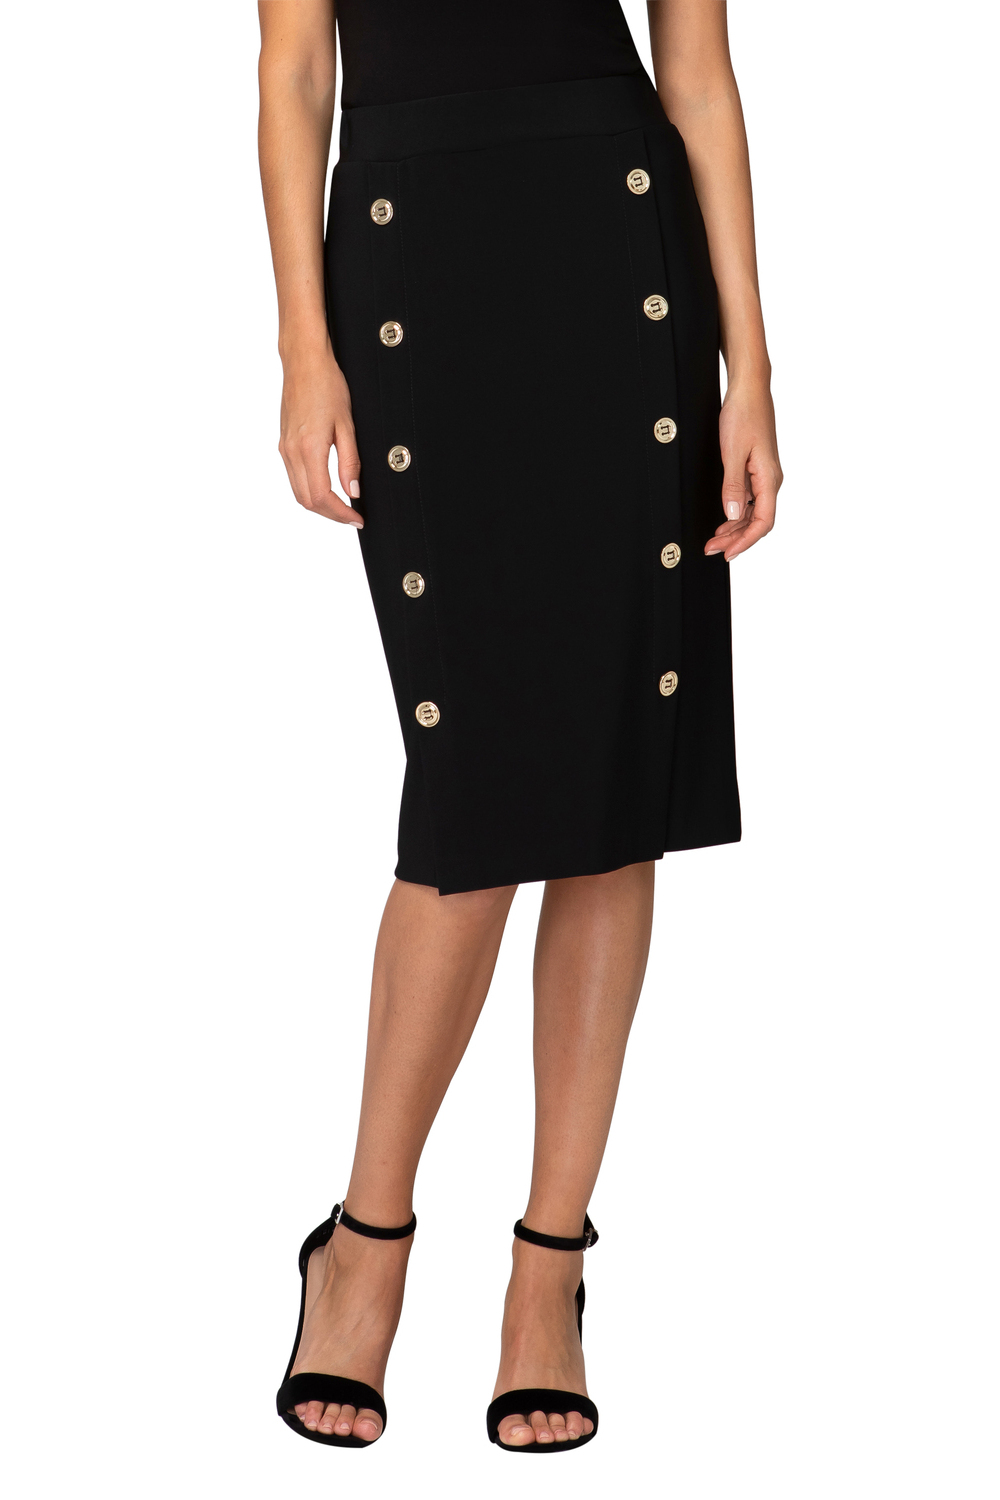 Joseph Ribkoff skirt style 193090. Black